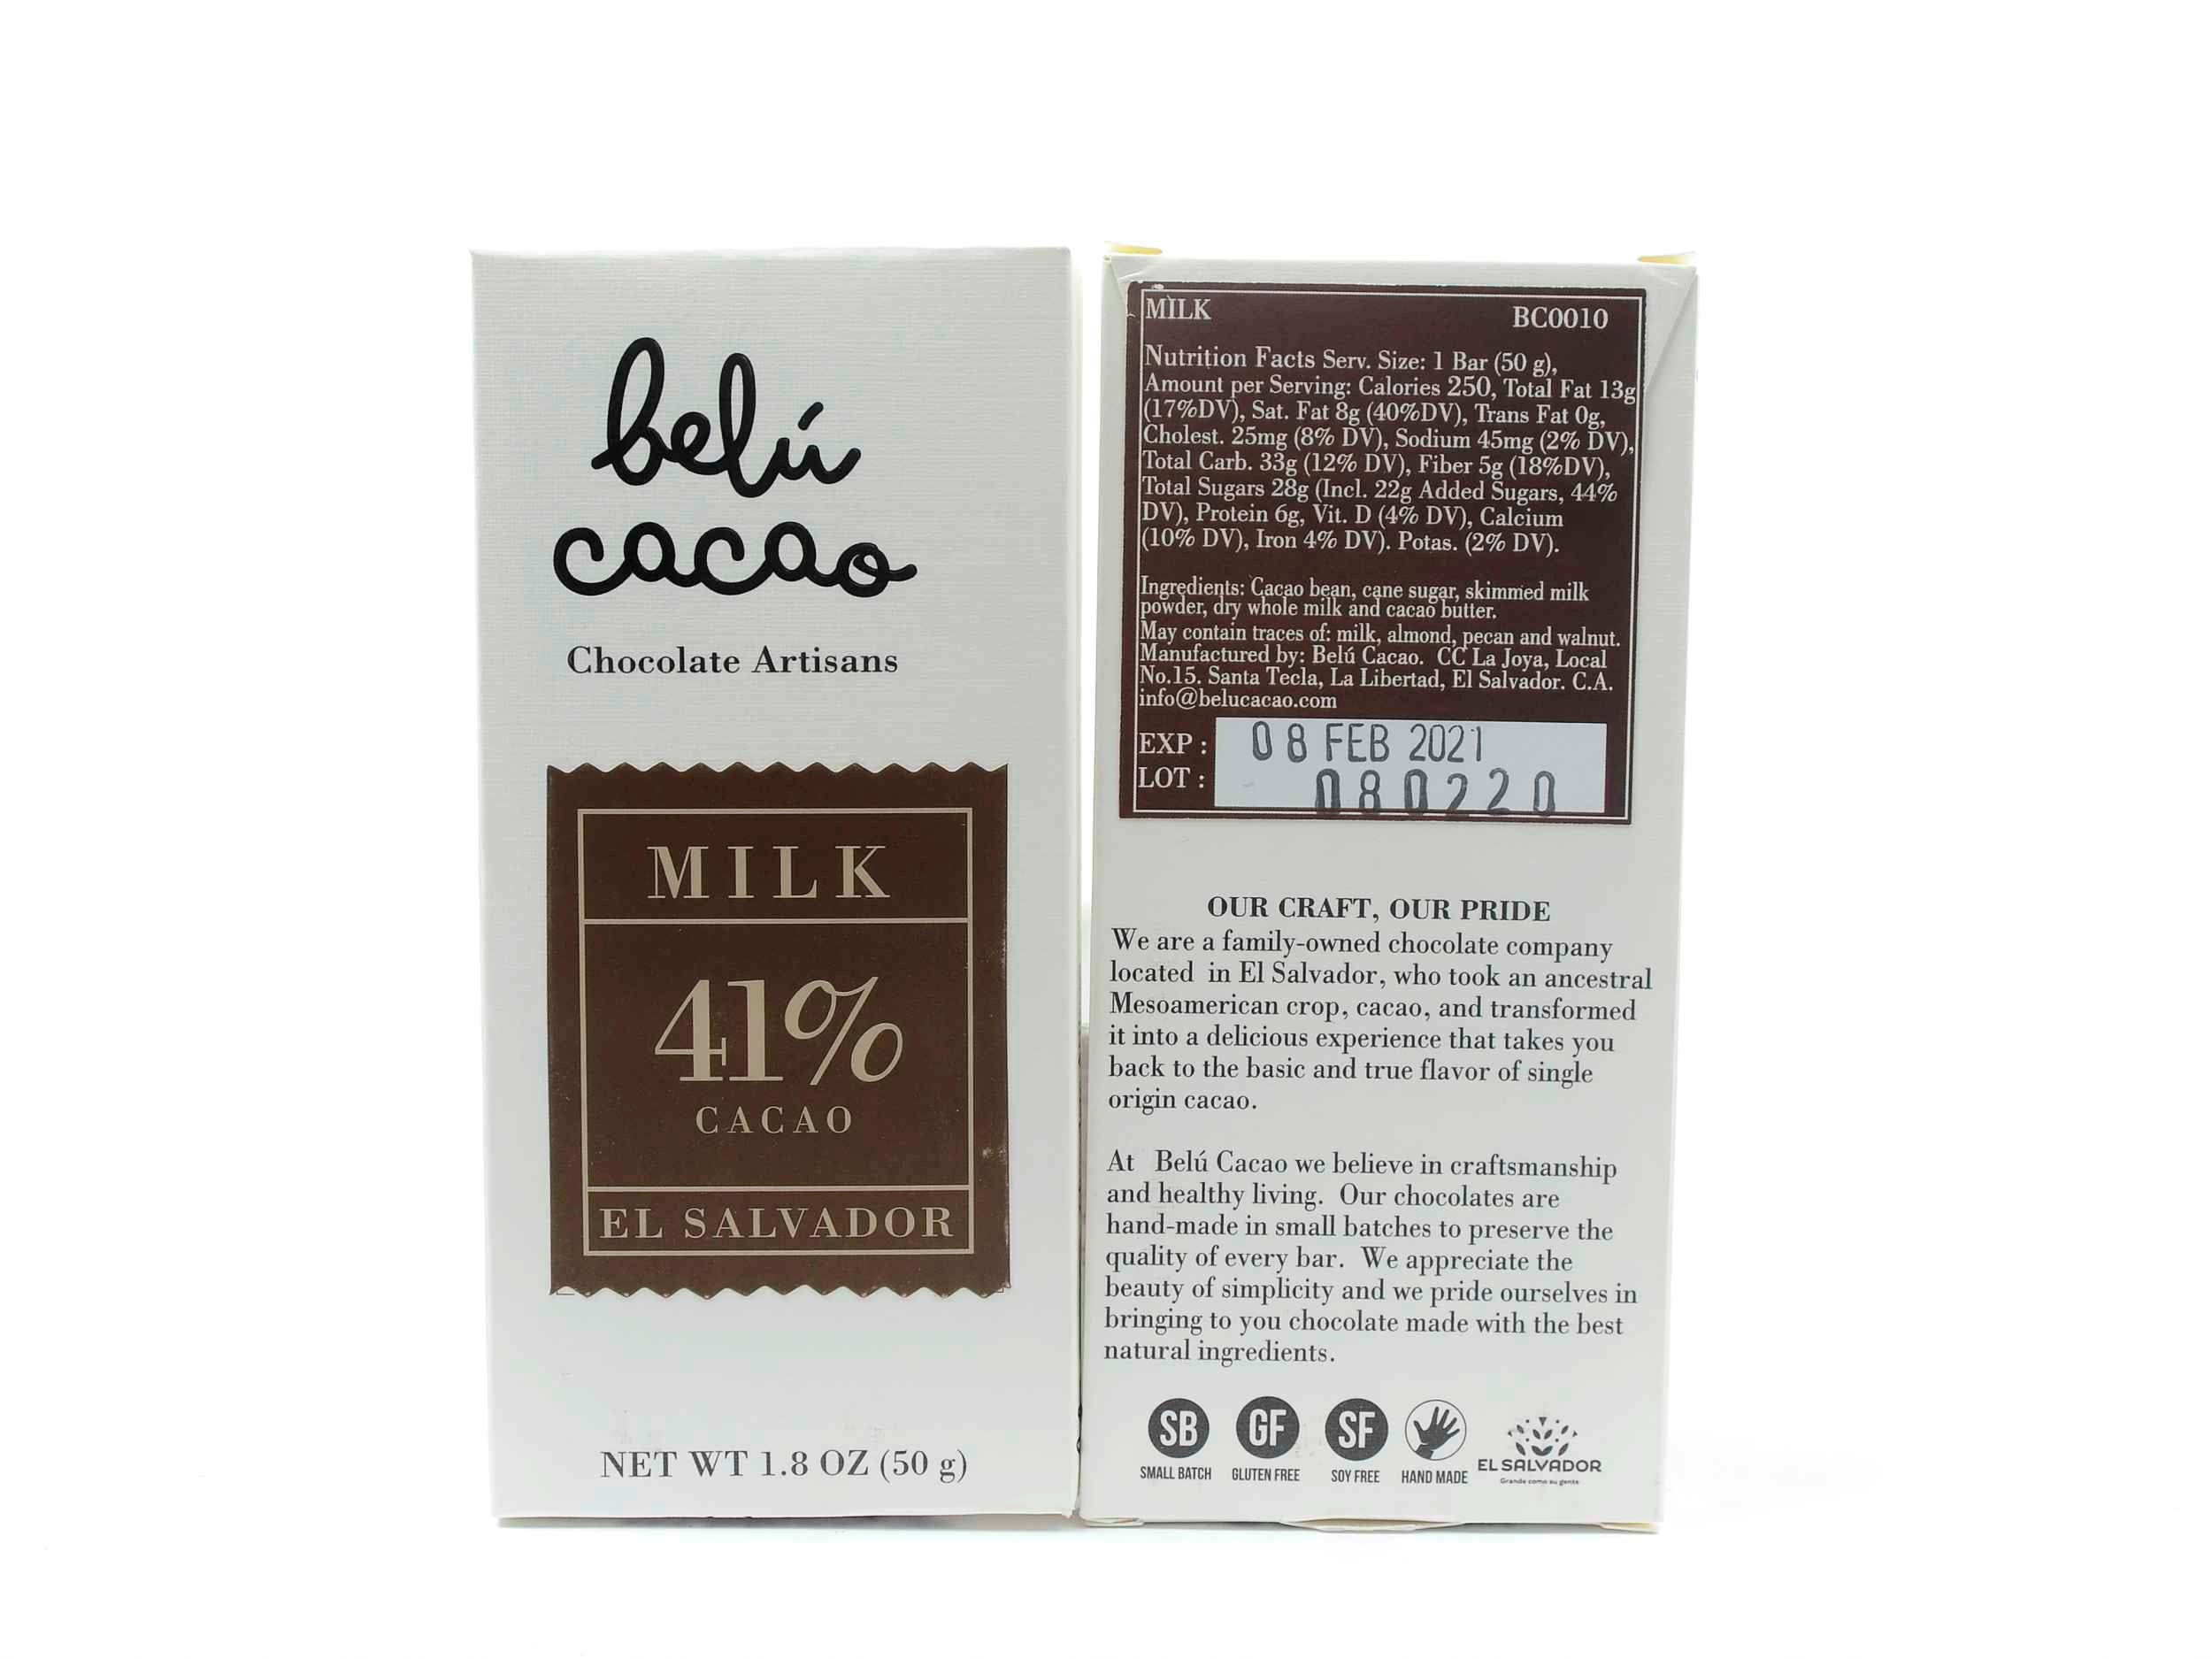 Belú Milk 41%